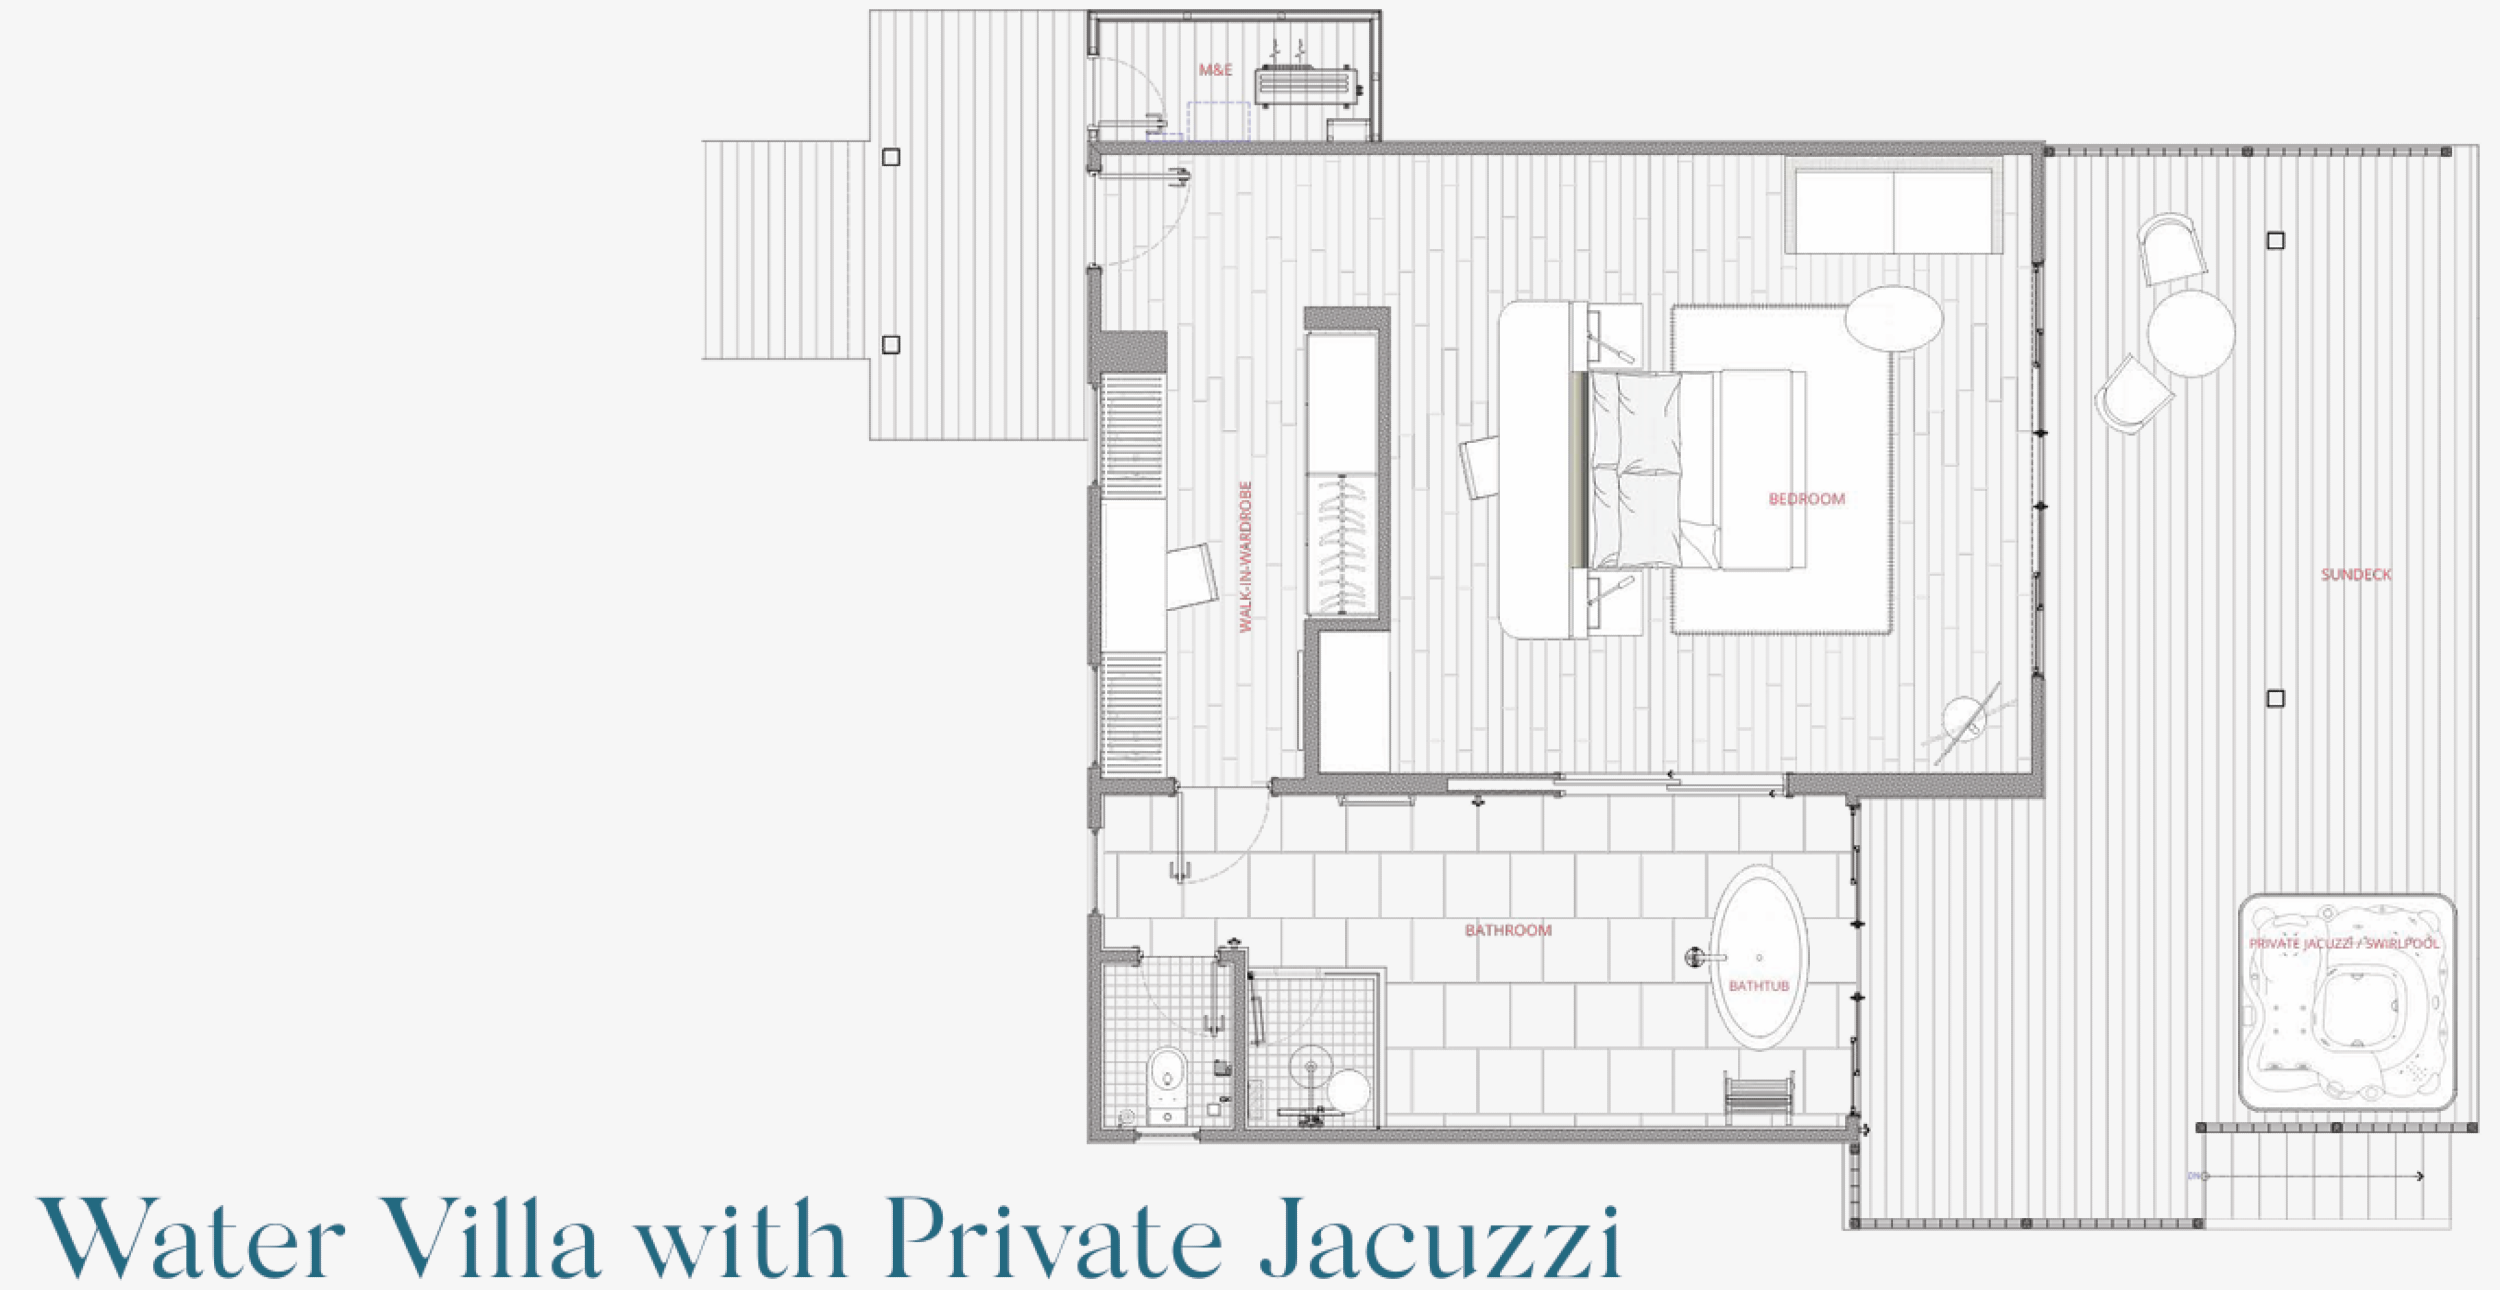 Water Villa with Jacuzzi - Nova Maldives - Floor Plan